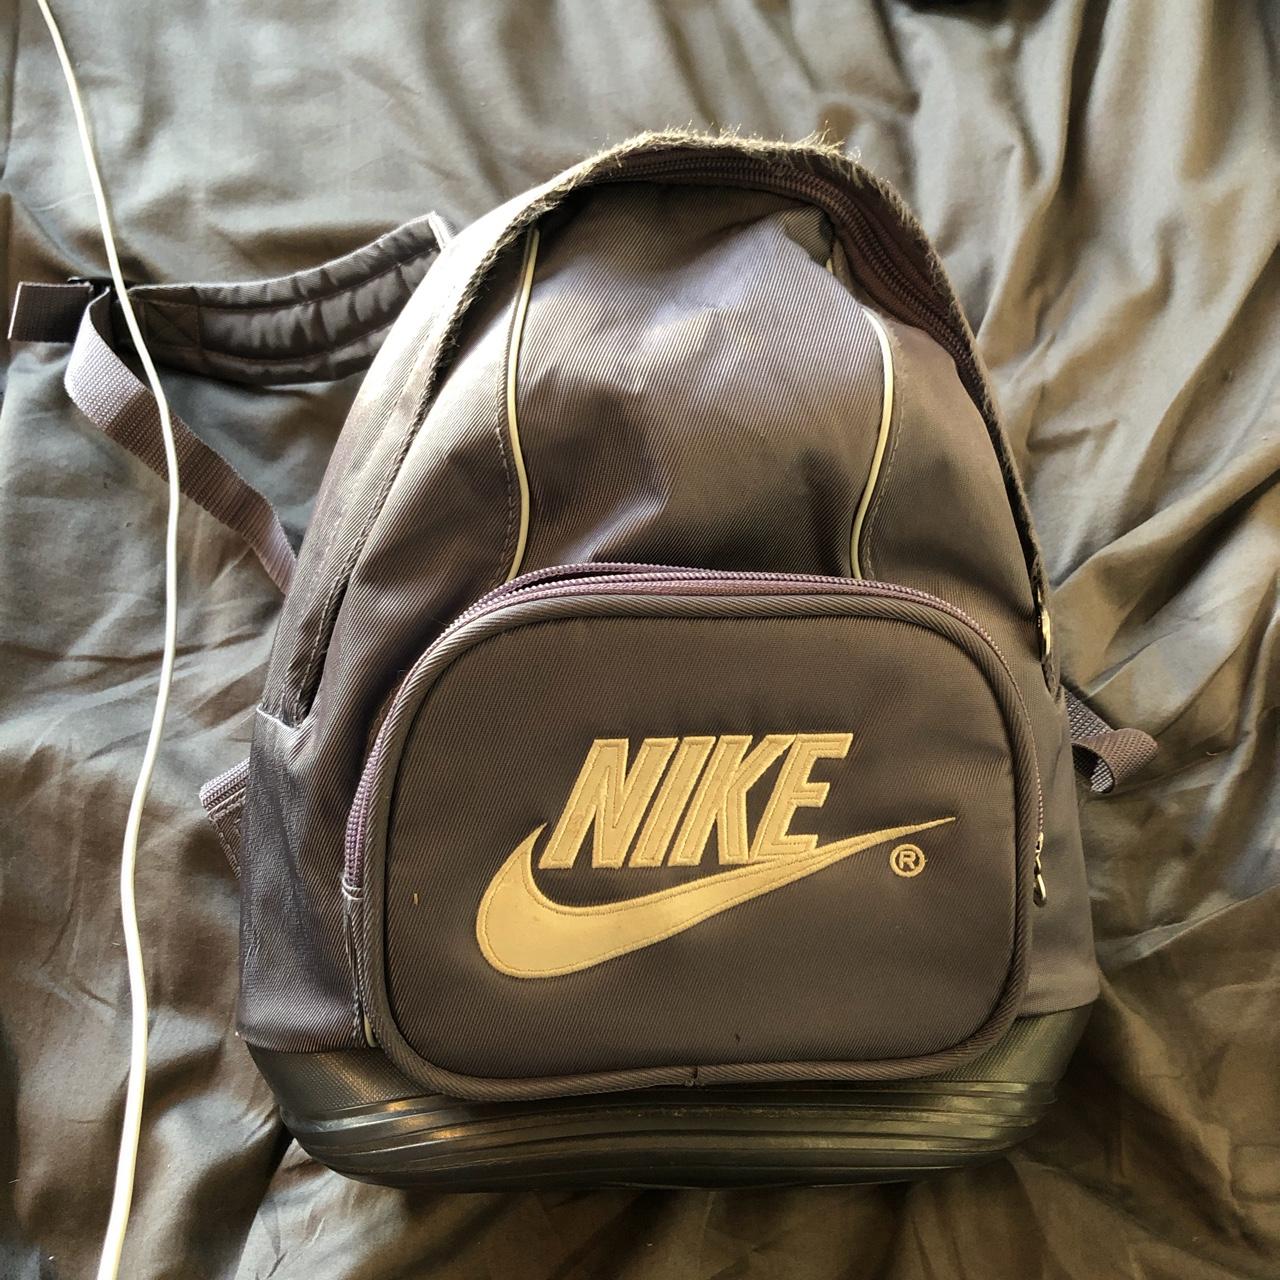 Nike MINI backpack / rucksack really nice and vintage - Depop